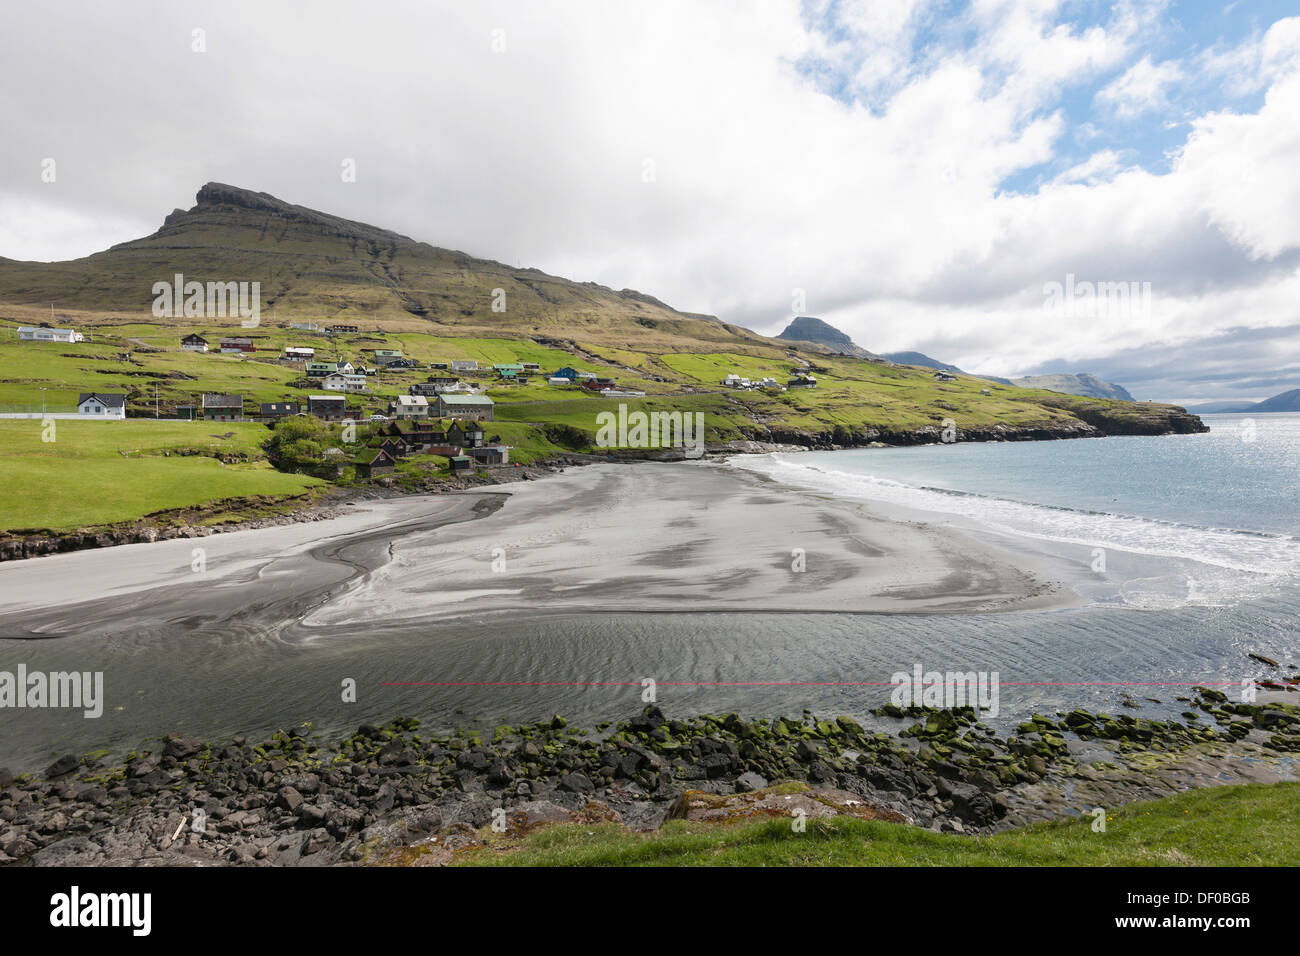 Community of Leynar with commons or community area, Streymoy Island, Faroe Islands, Denmark, Northern Europe, Europe Stock Photo